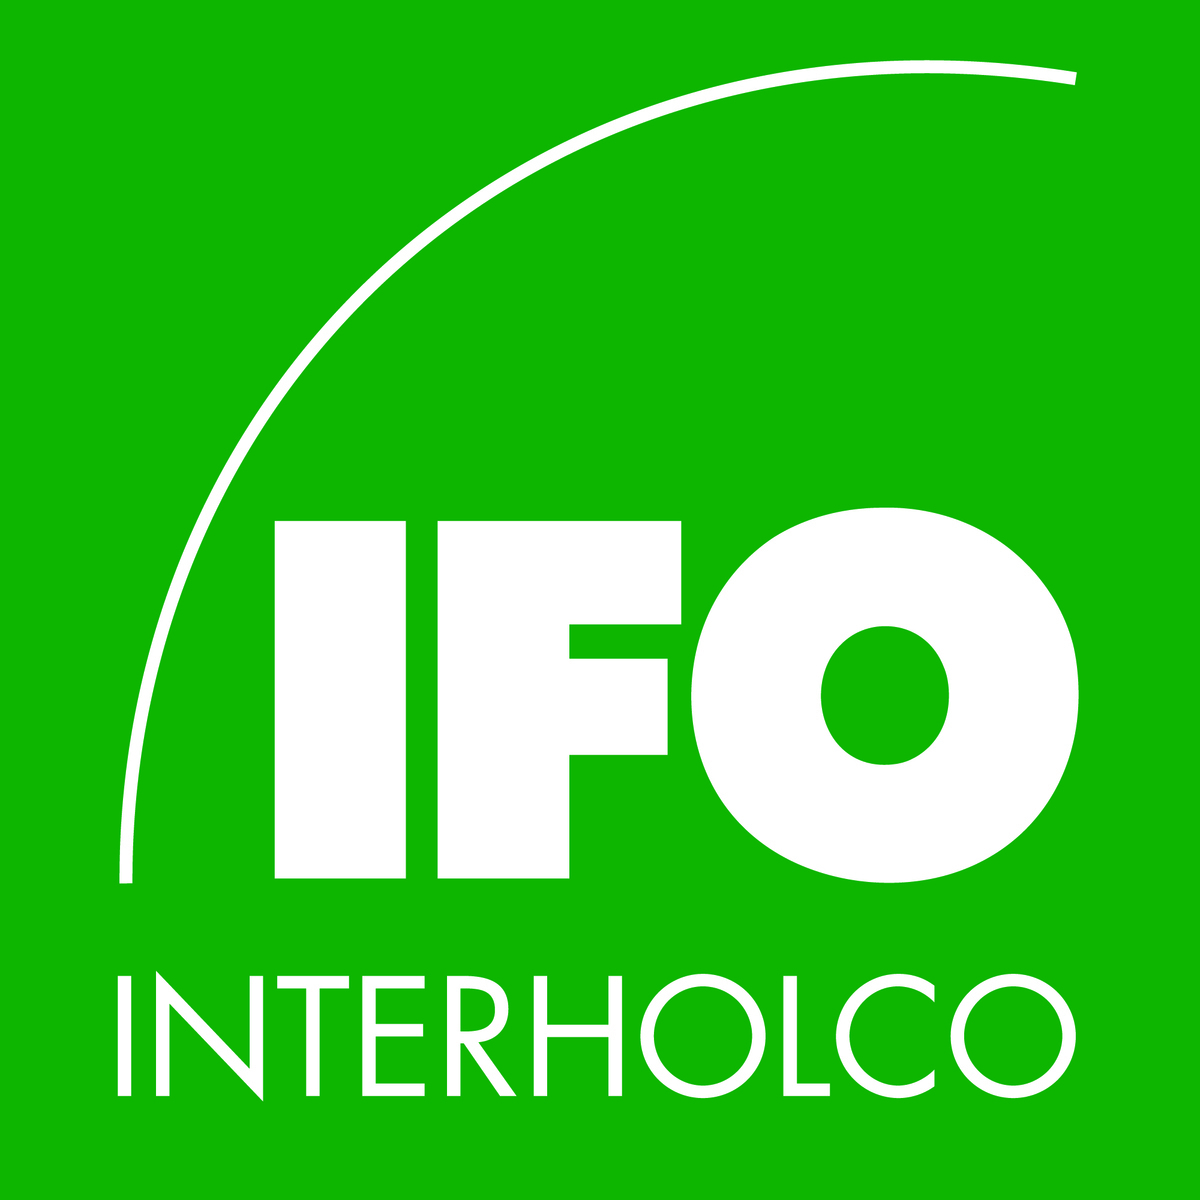 IFO / Interholco logo